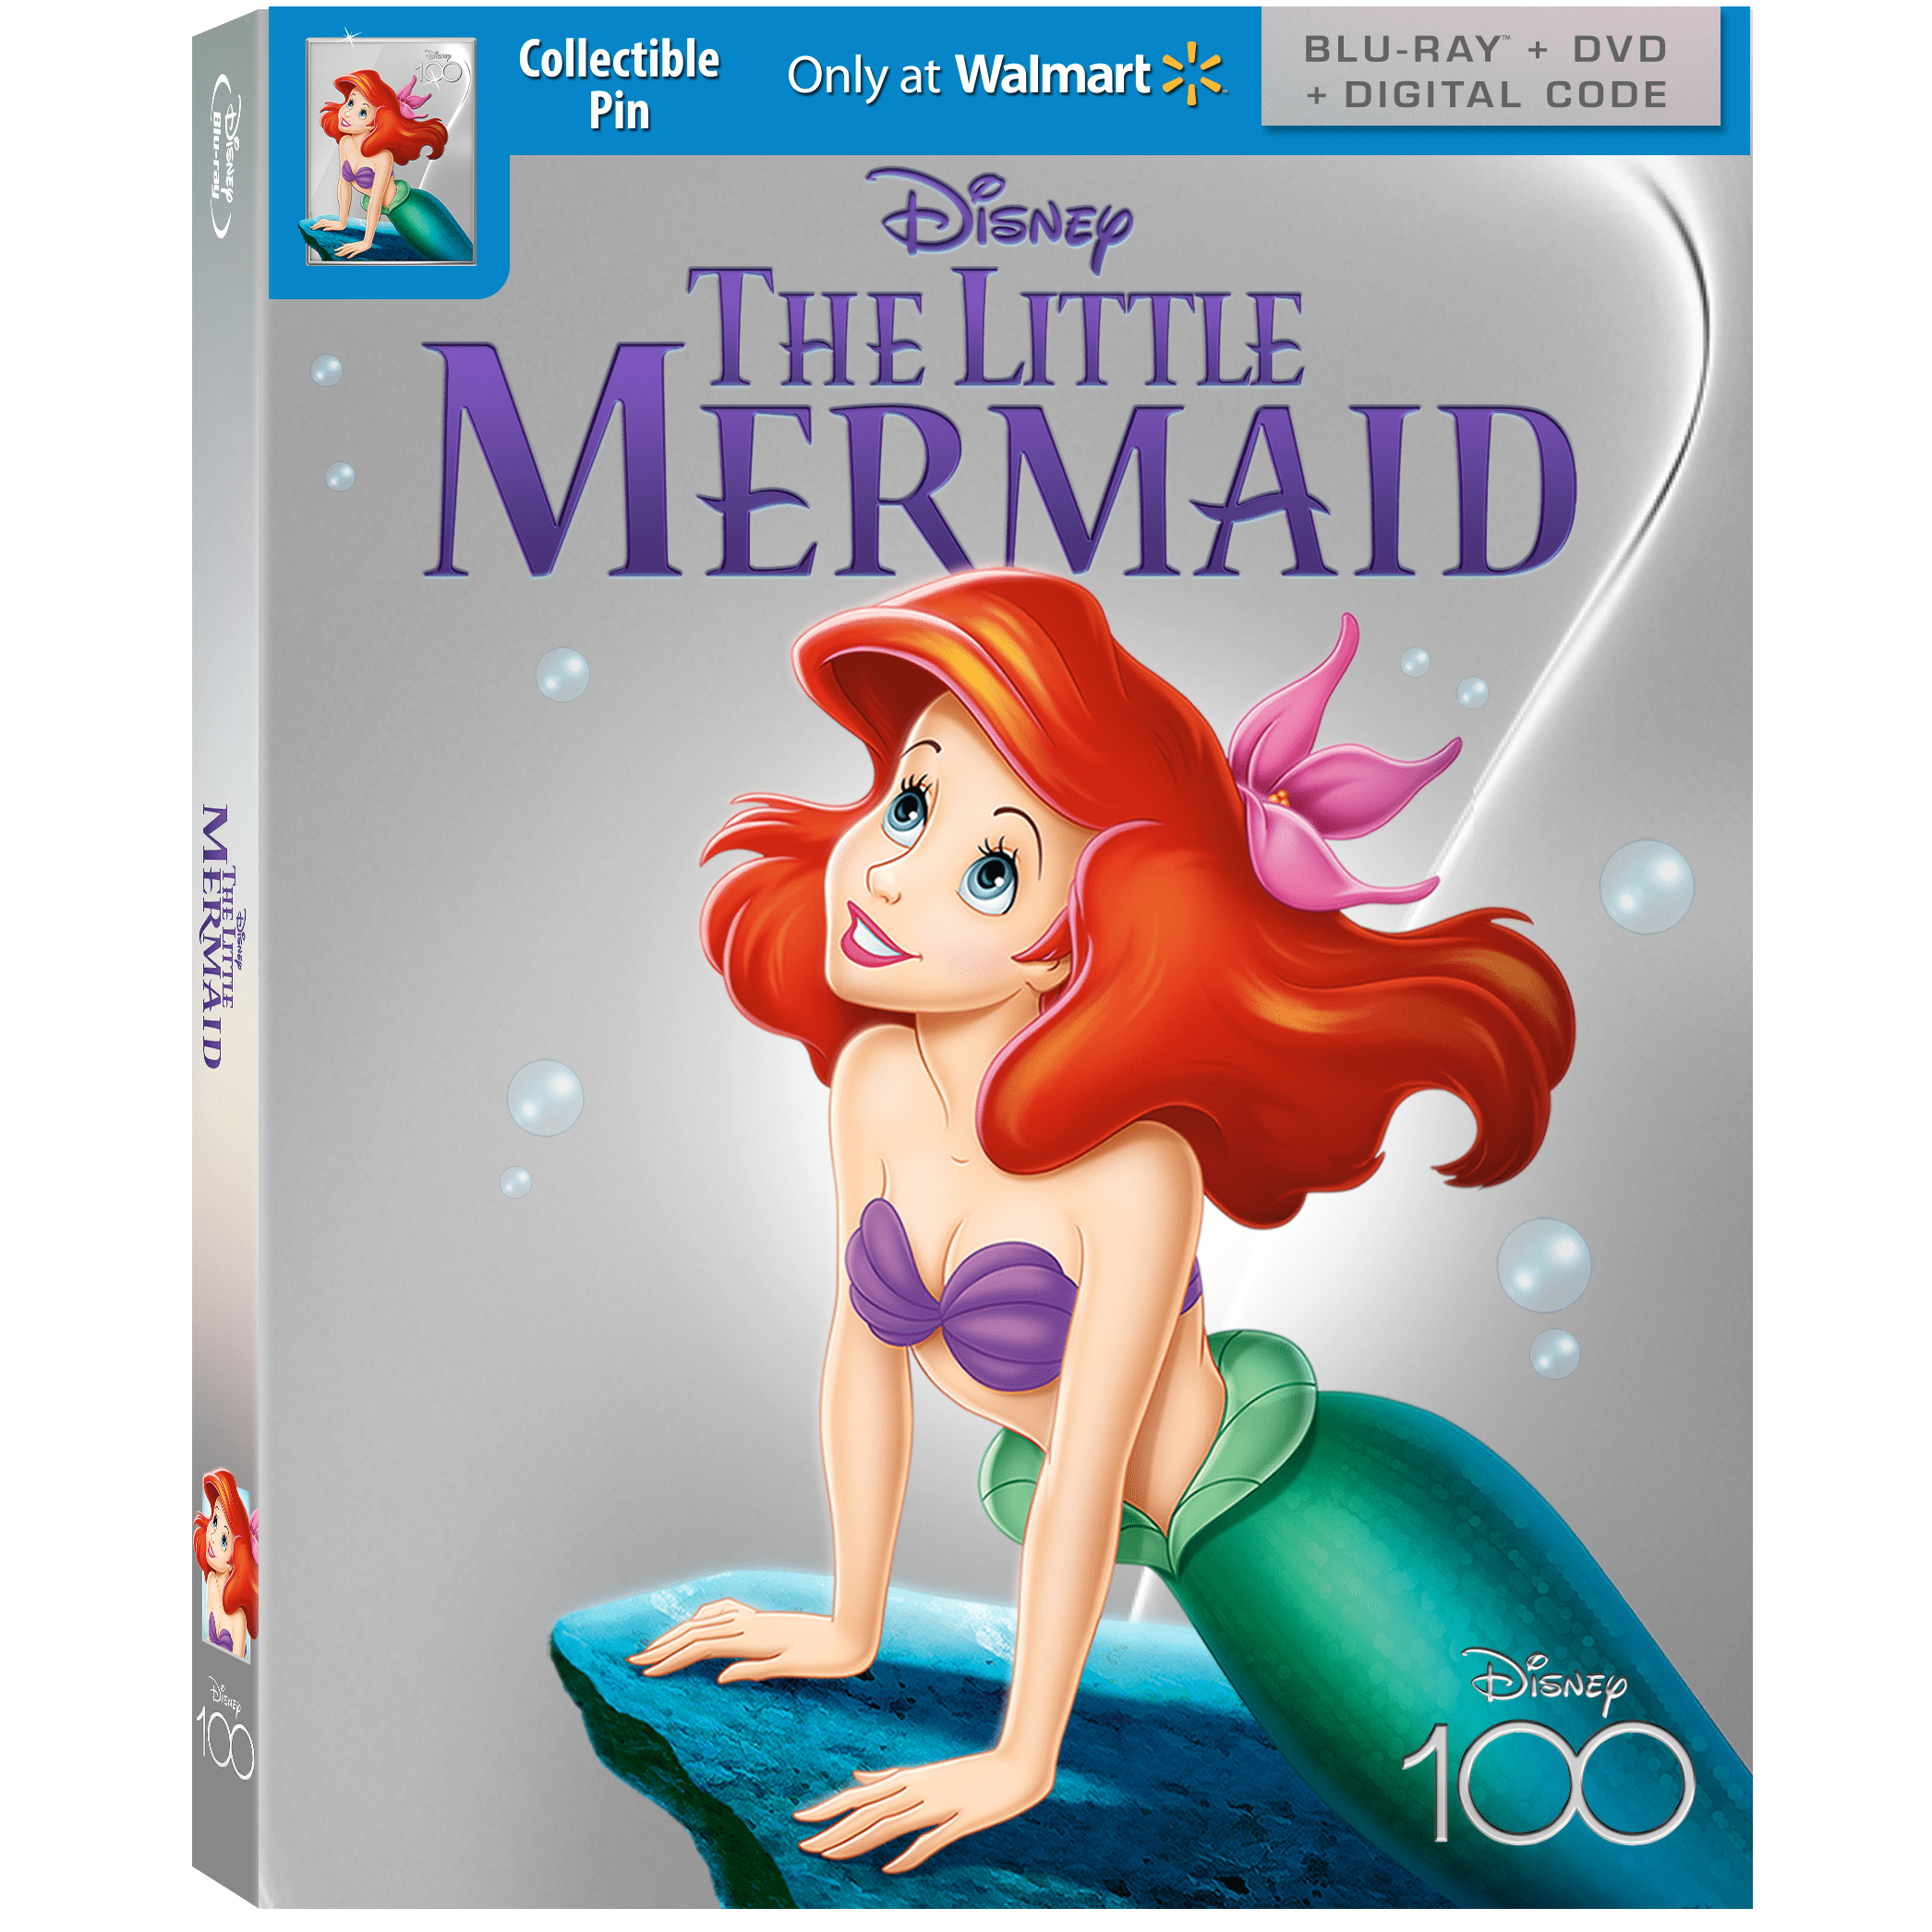 The Little Mermaid - Disney100 Edition Walmart Exclusive (Blu-Ray + DVD +  Digital Code) 